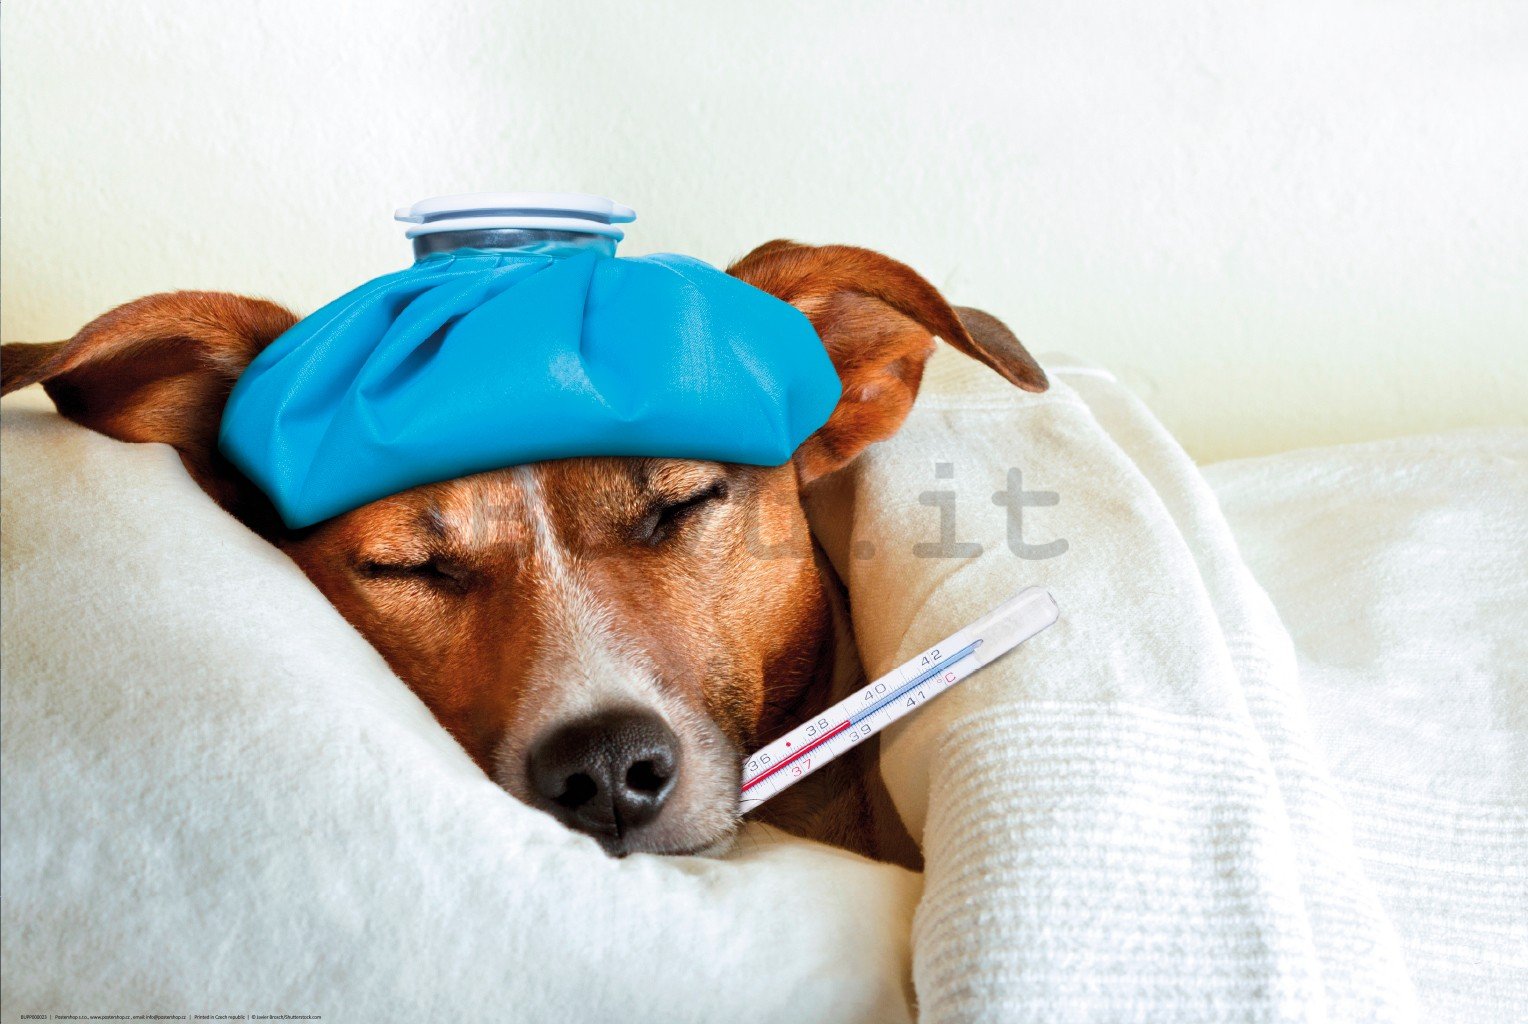 Poster: Jack Russell Terrier (malattia)